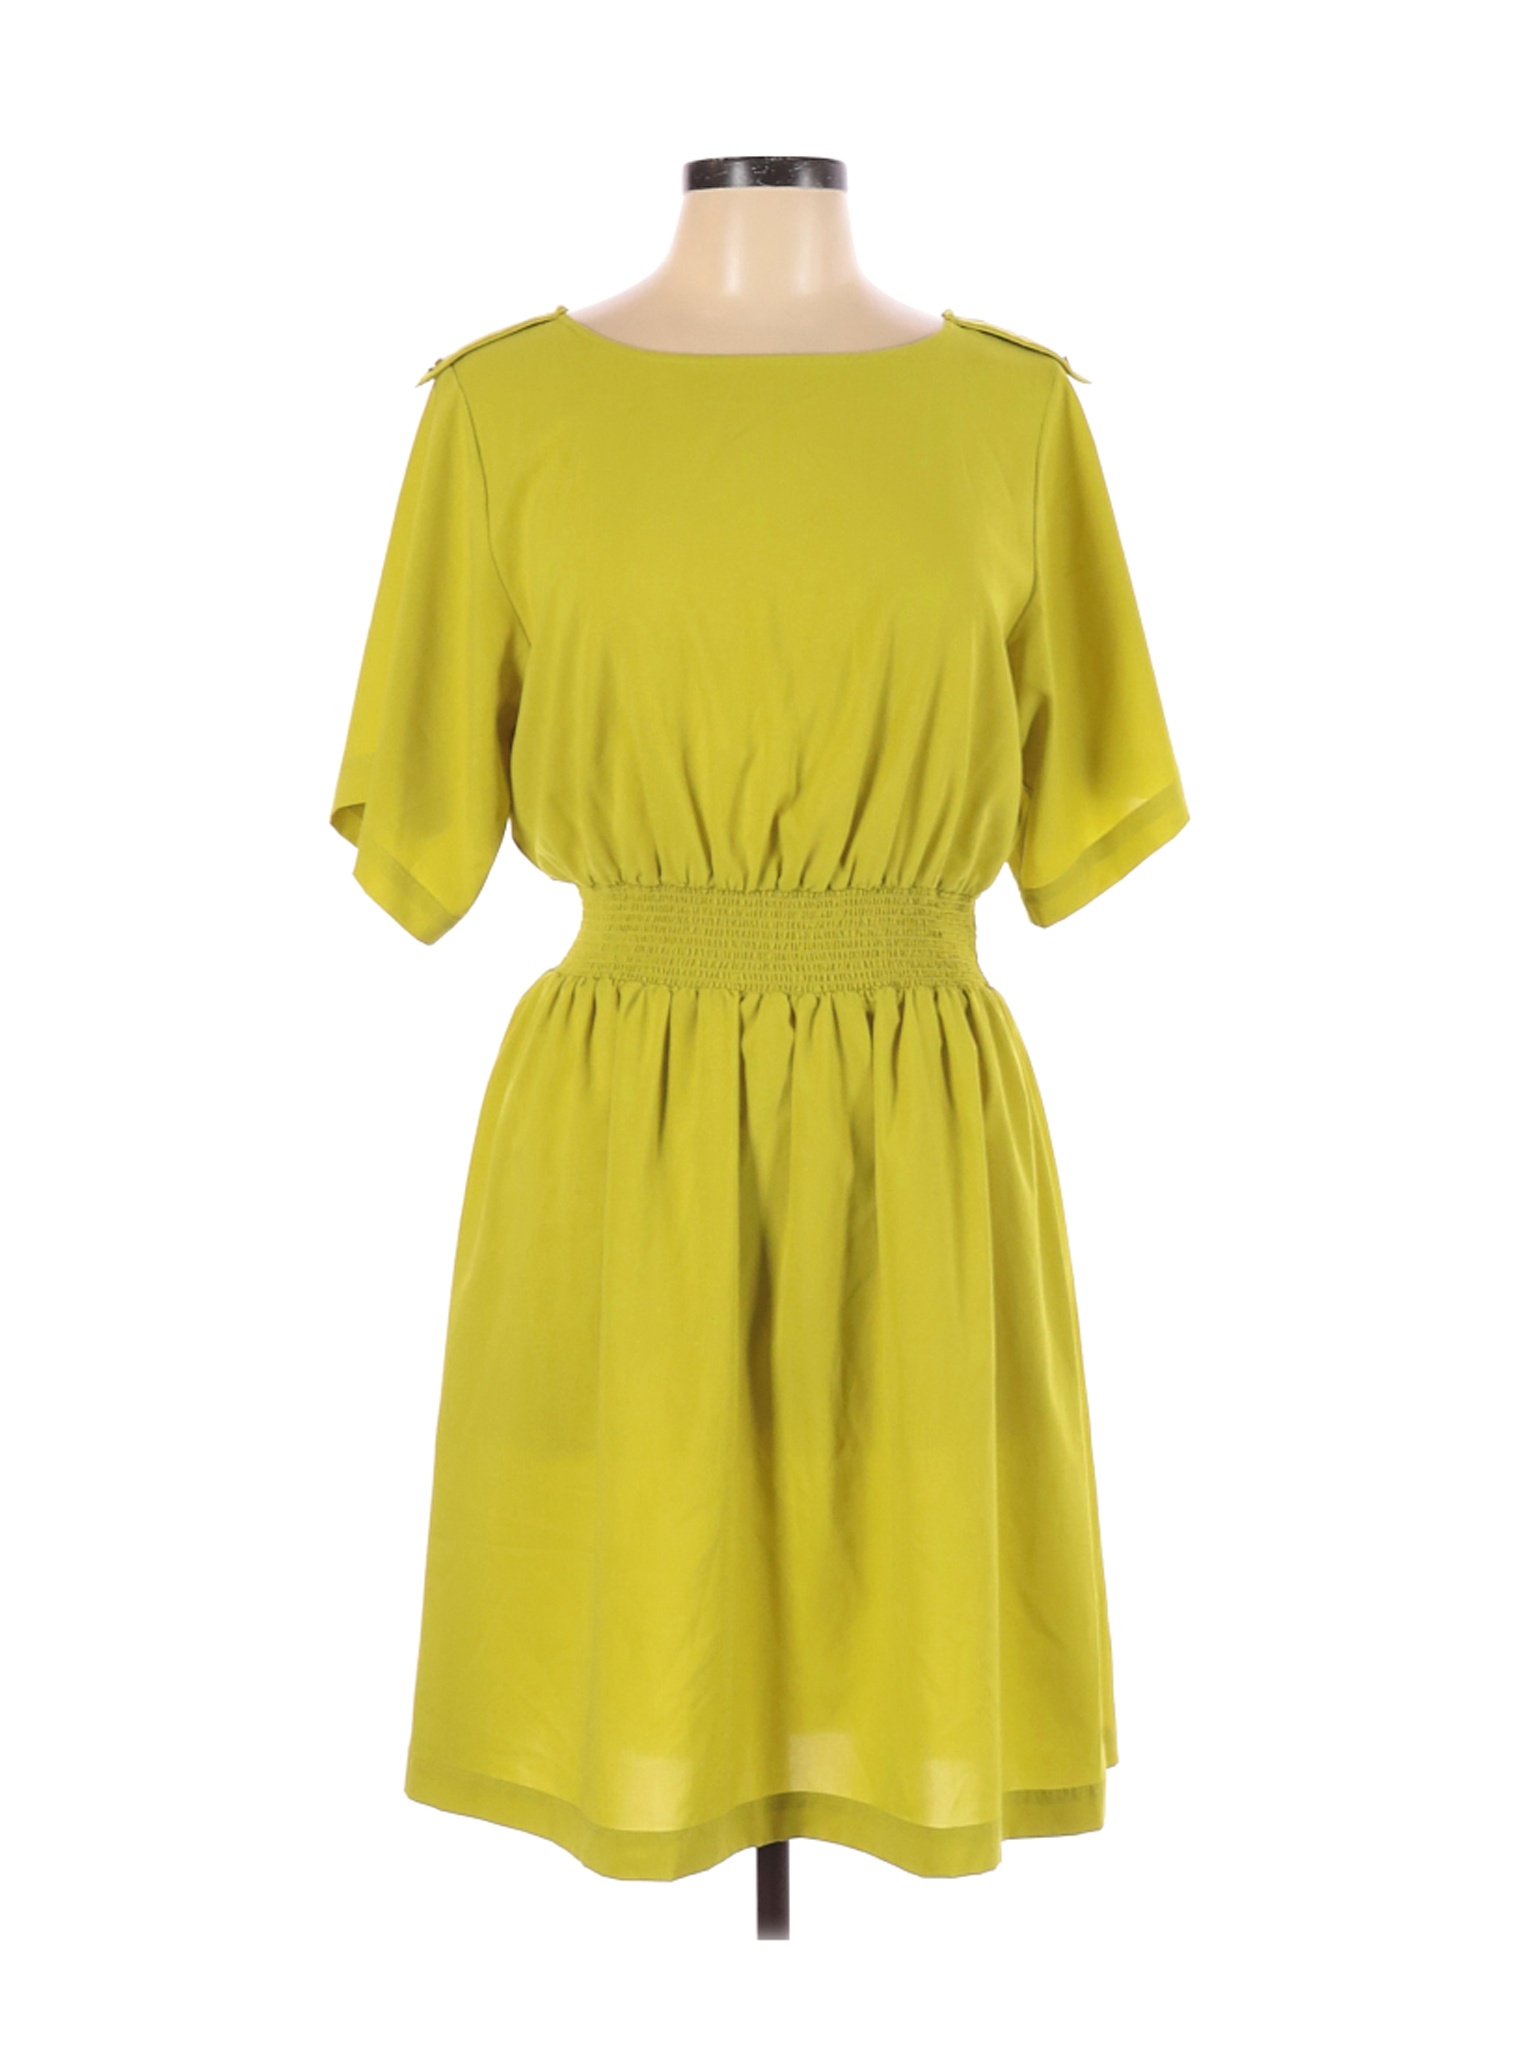 Calvin Klein Women Yellow Casual Dress 10 | eBay